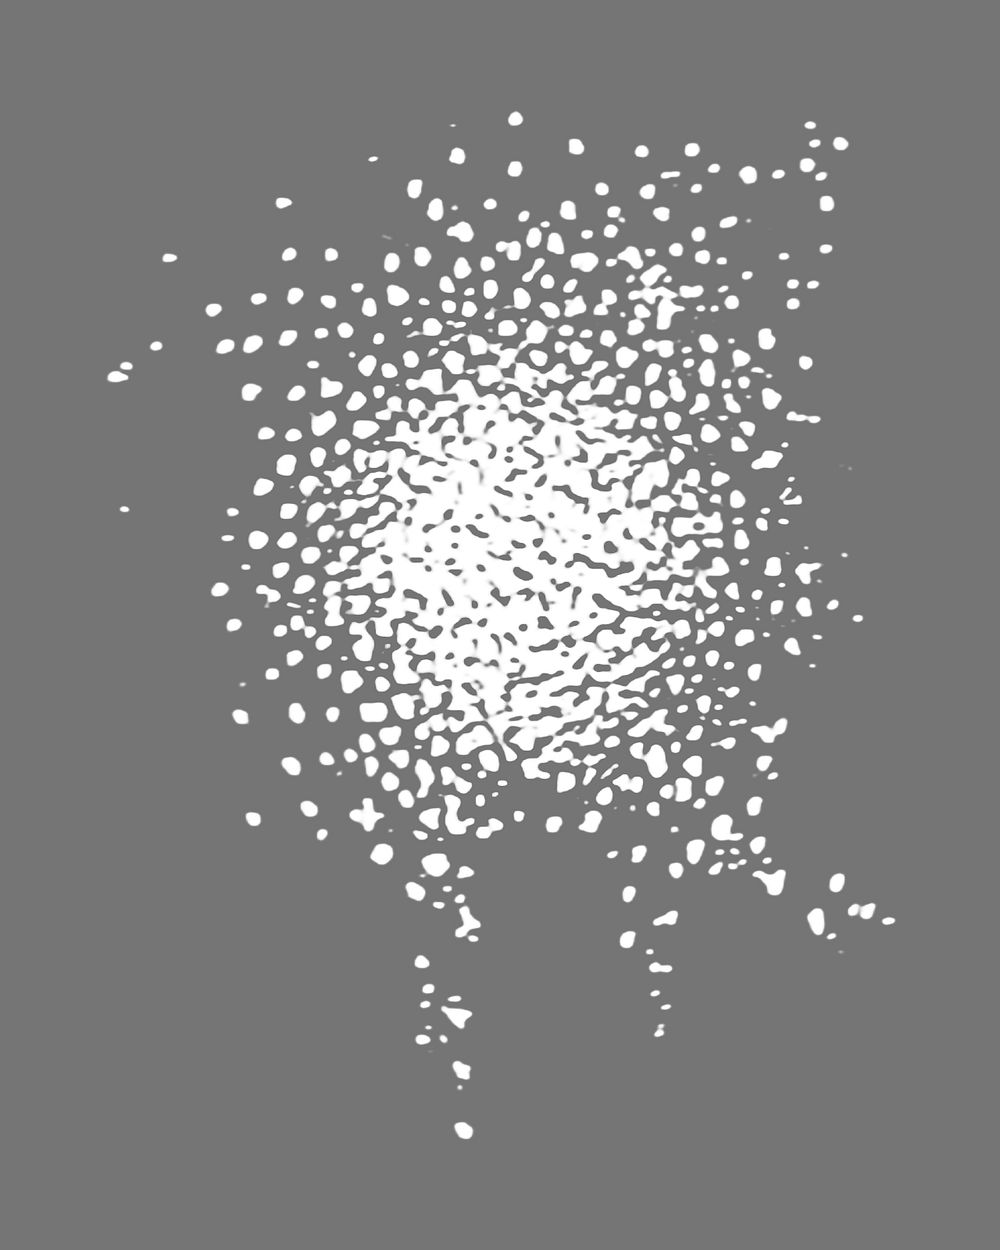 Globular cluster illustration. Remixed by rawpixel.